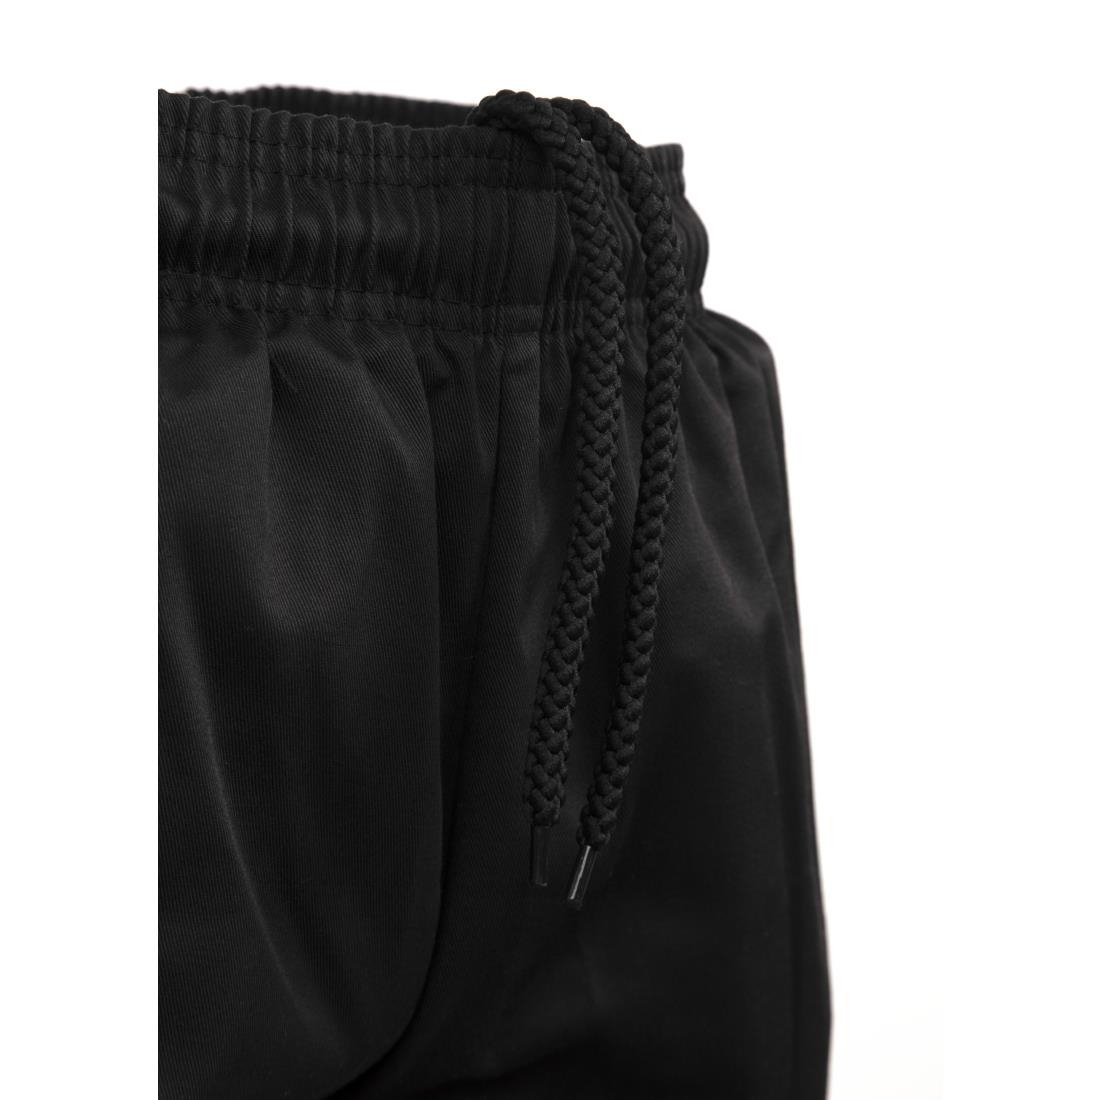 Pantalon cargo Whites noir L